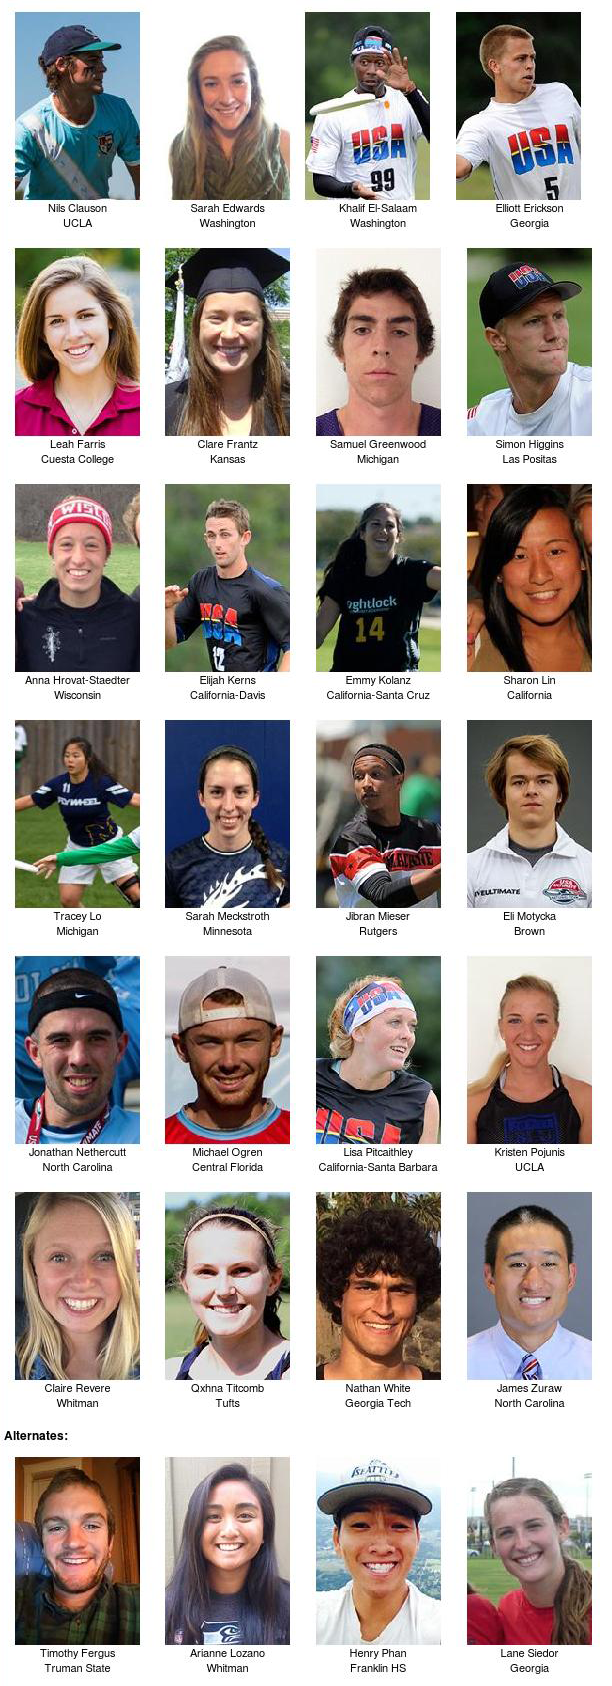 2015 U23 Mixed Division -- Team USA